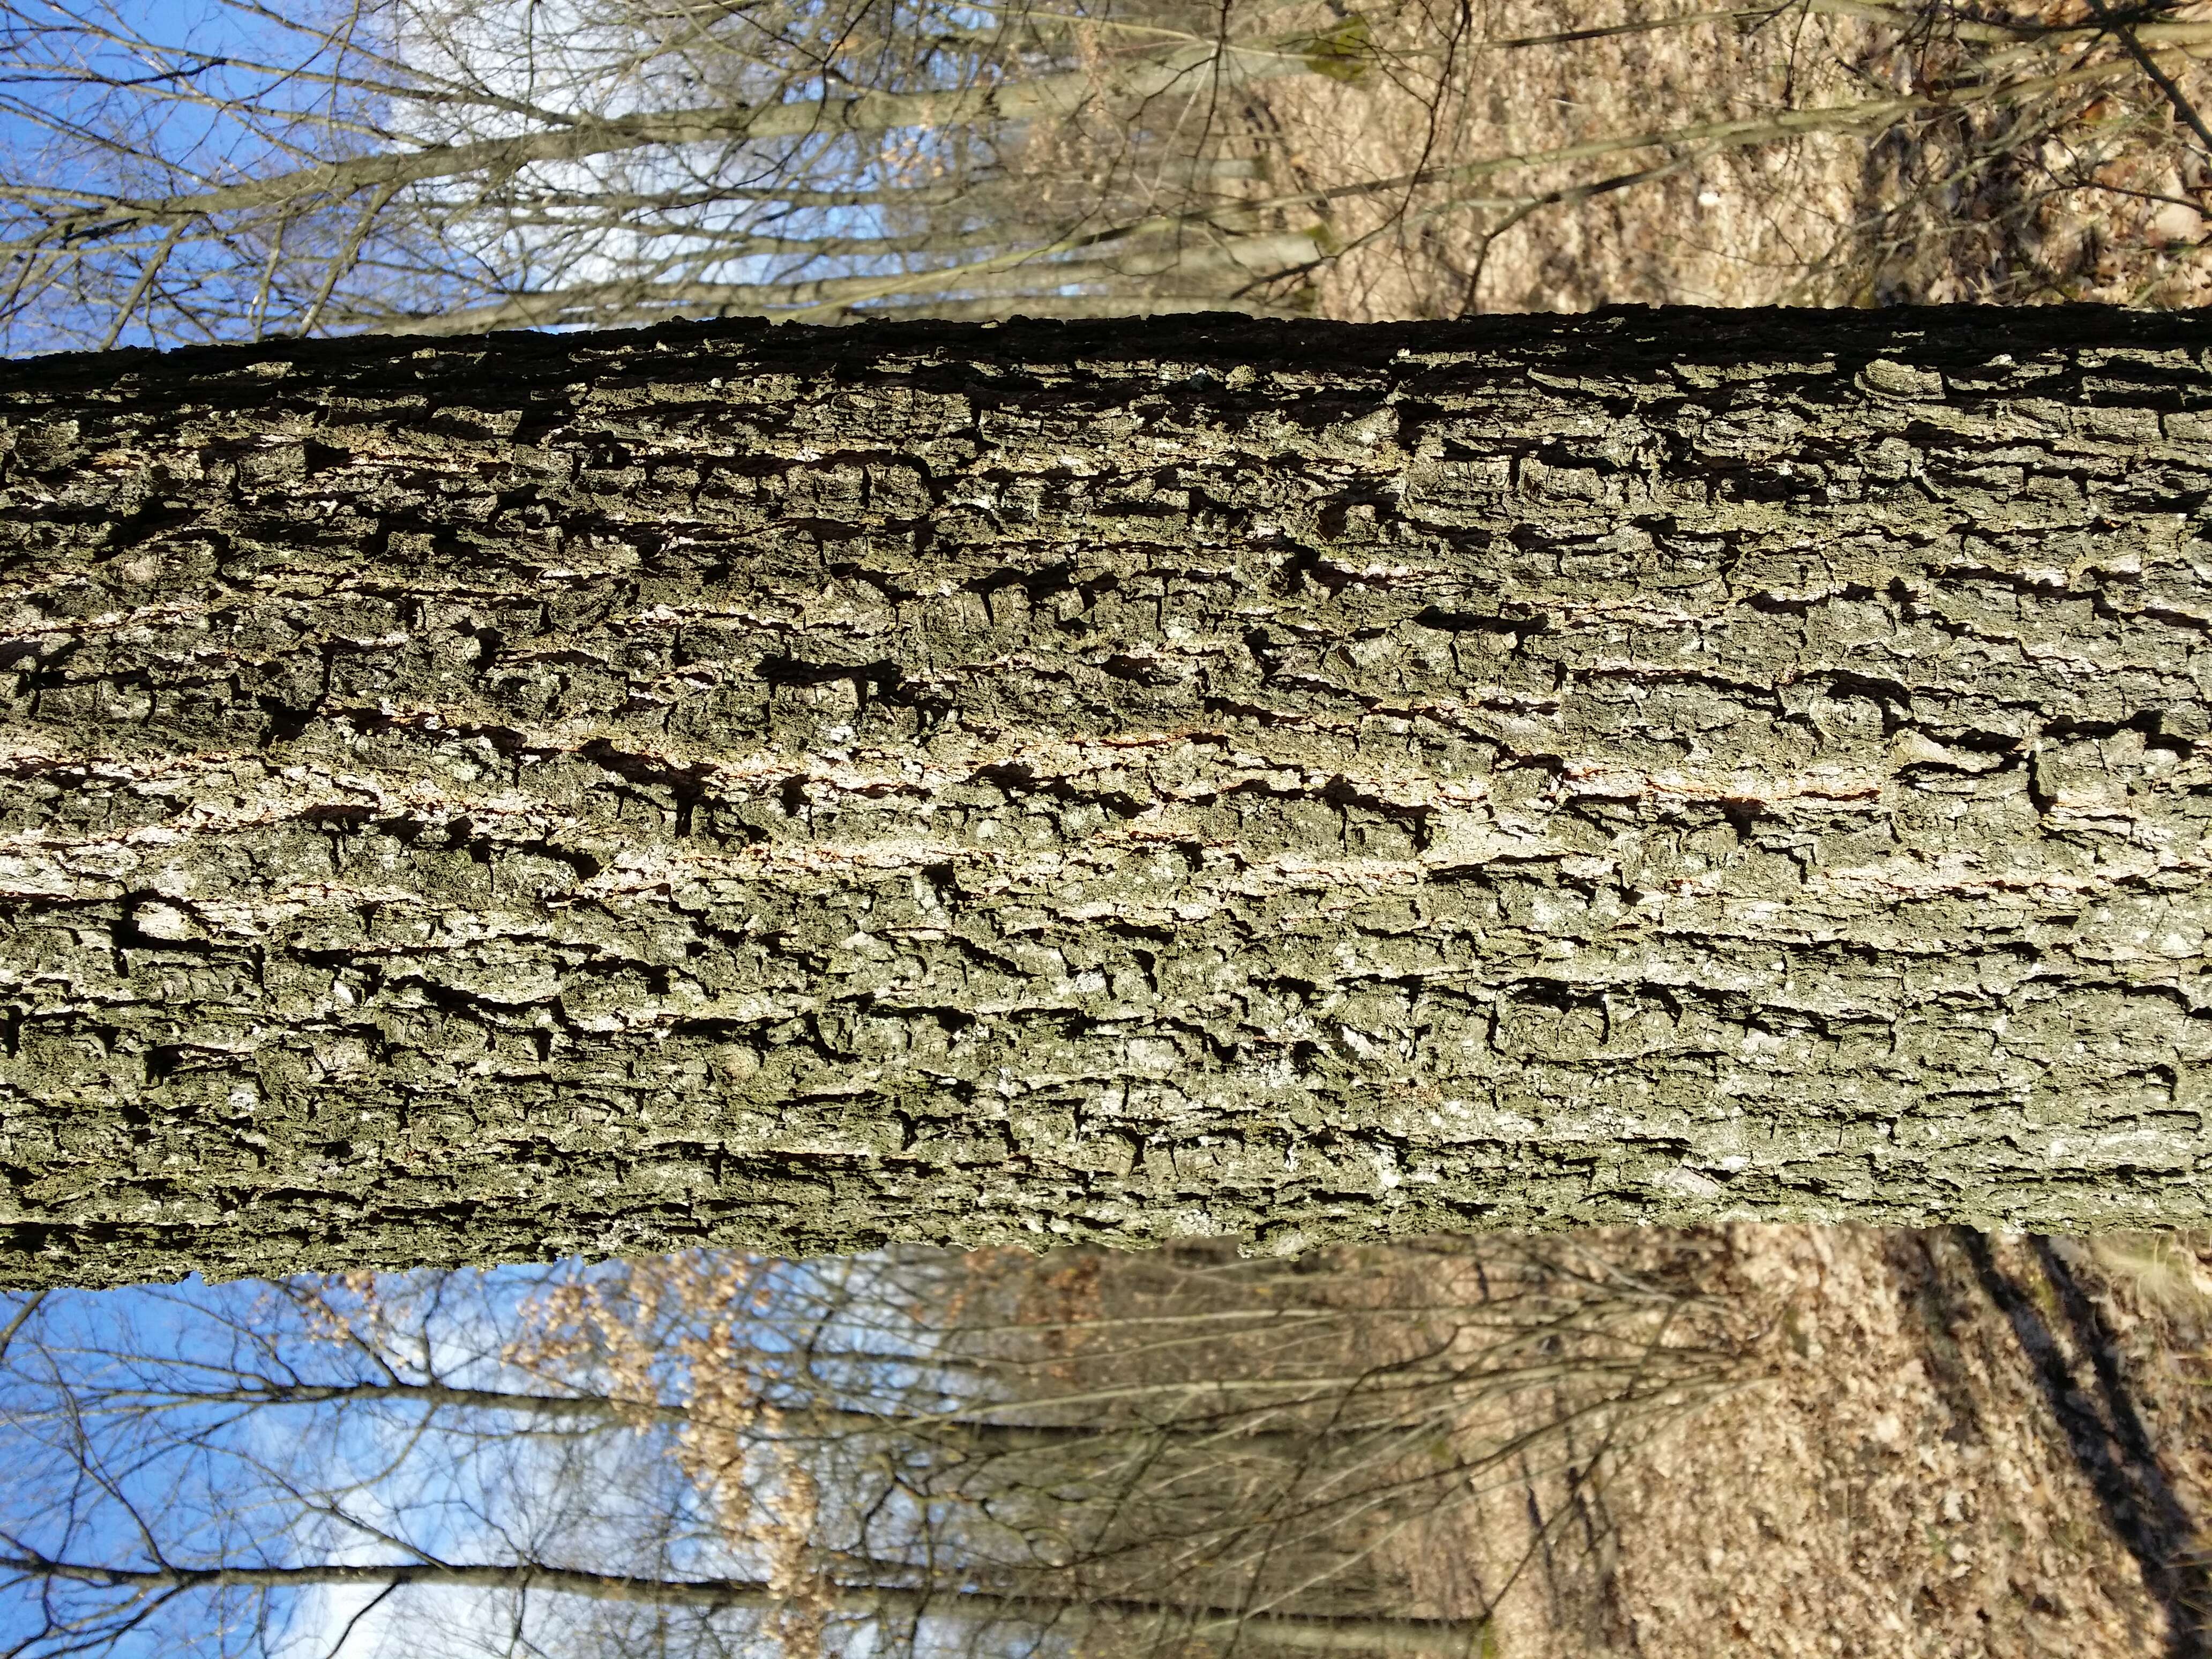 Image of sessile oak, durmast oak